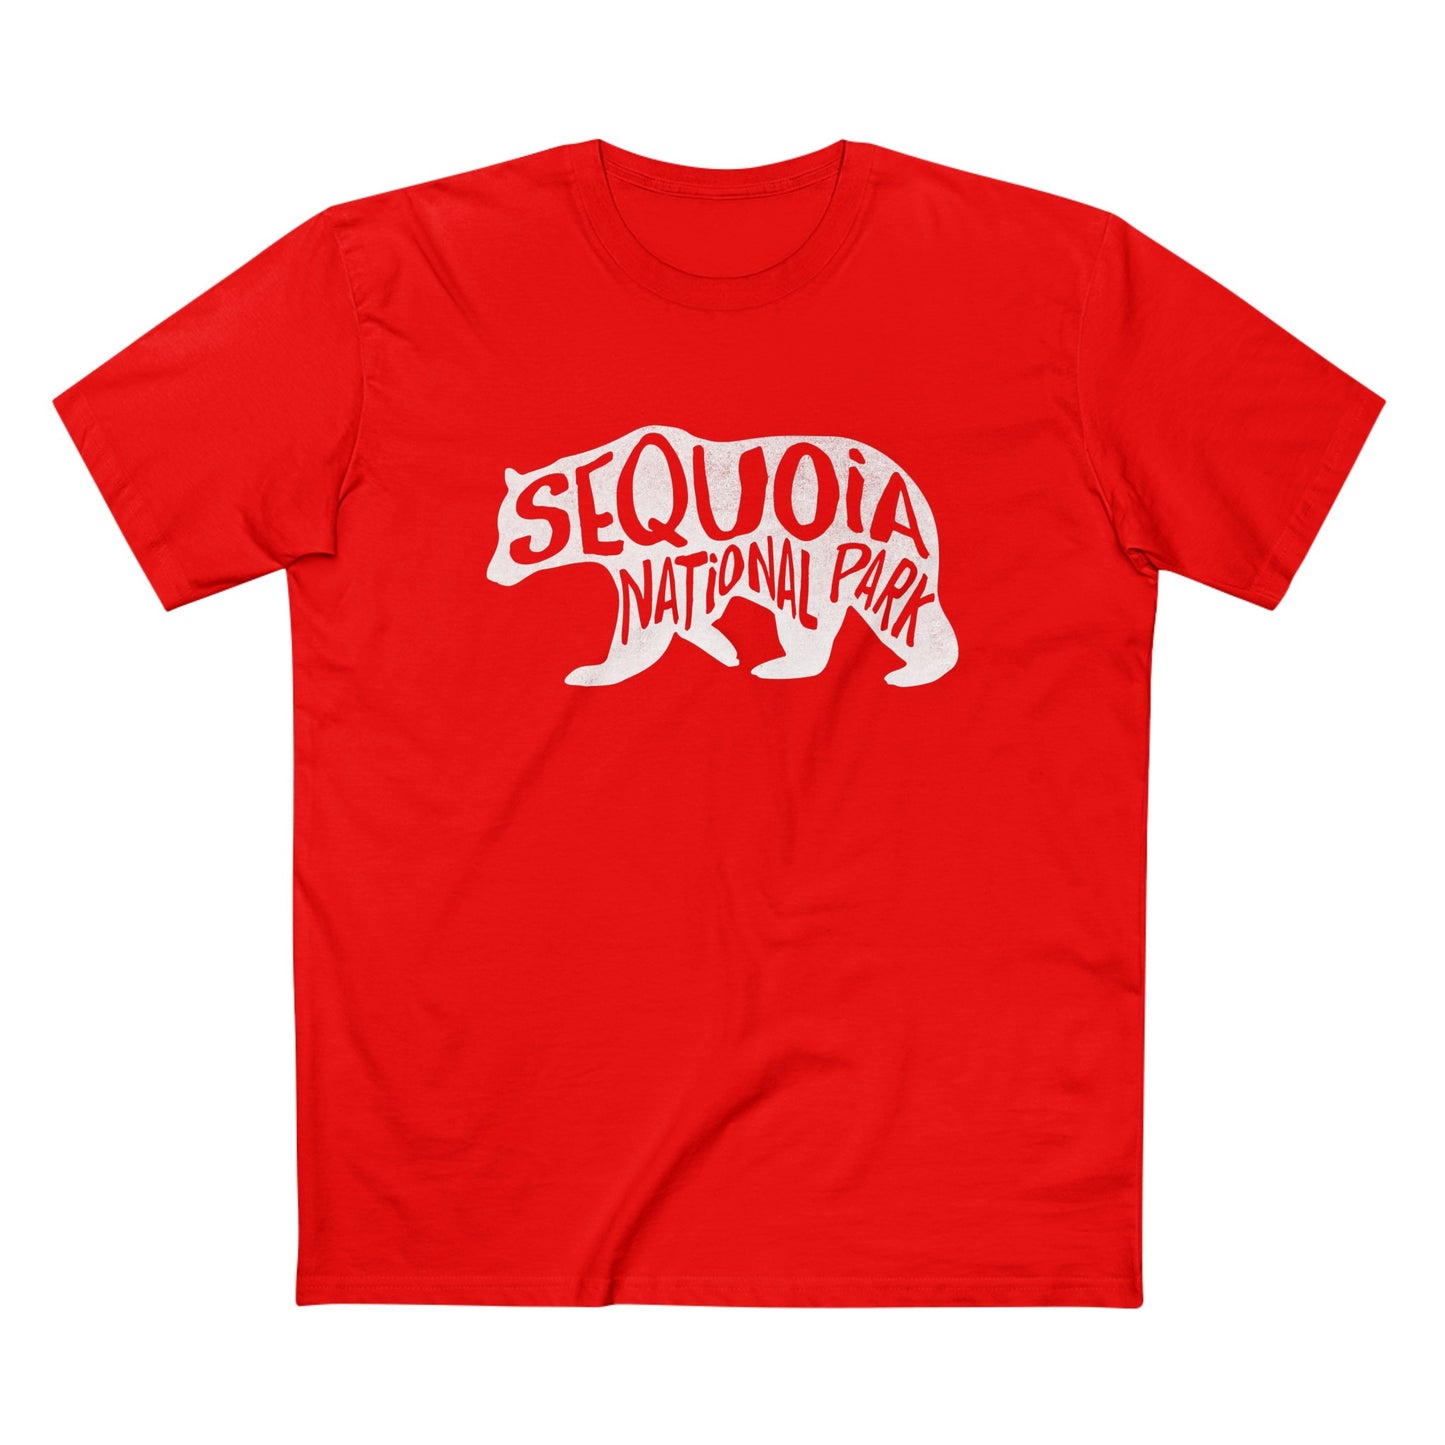 Sequoia National Park T-Shirt - Black Bear